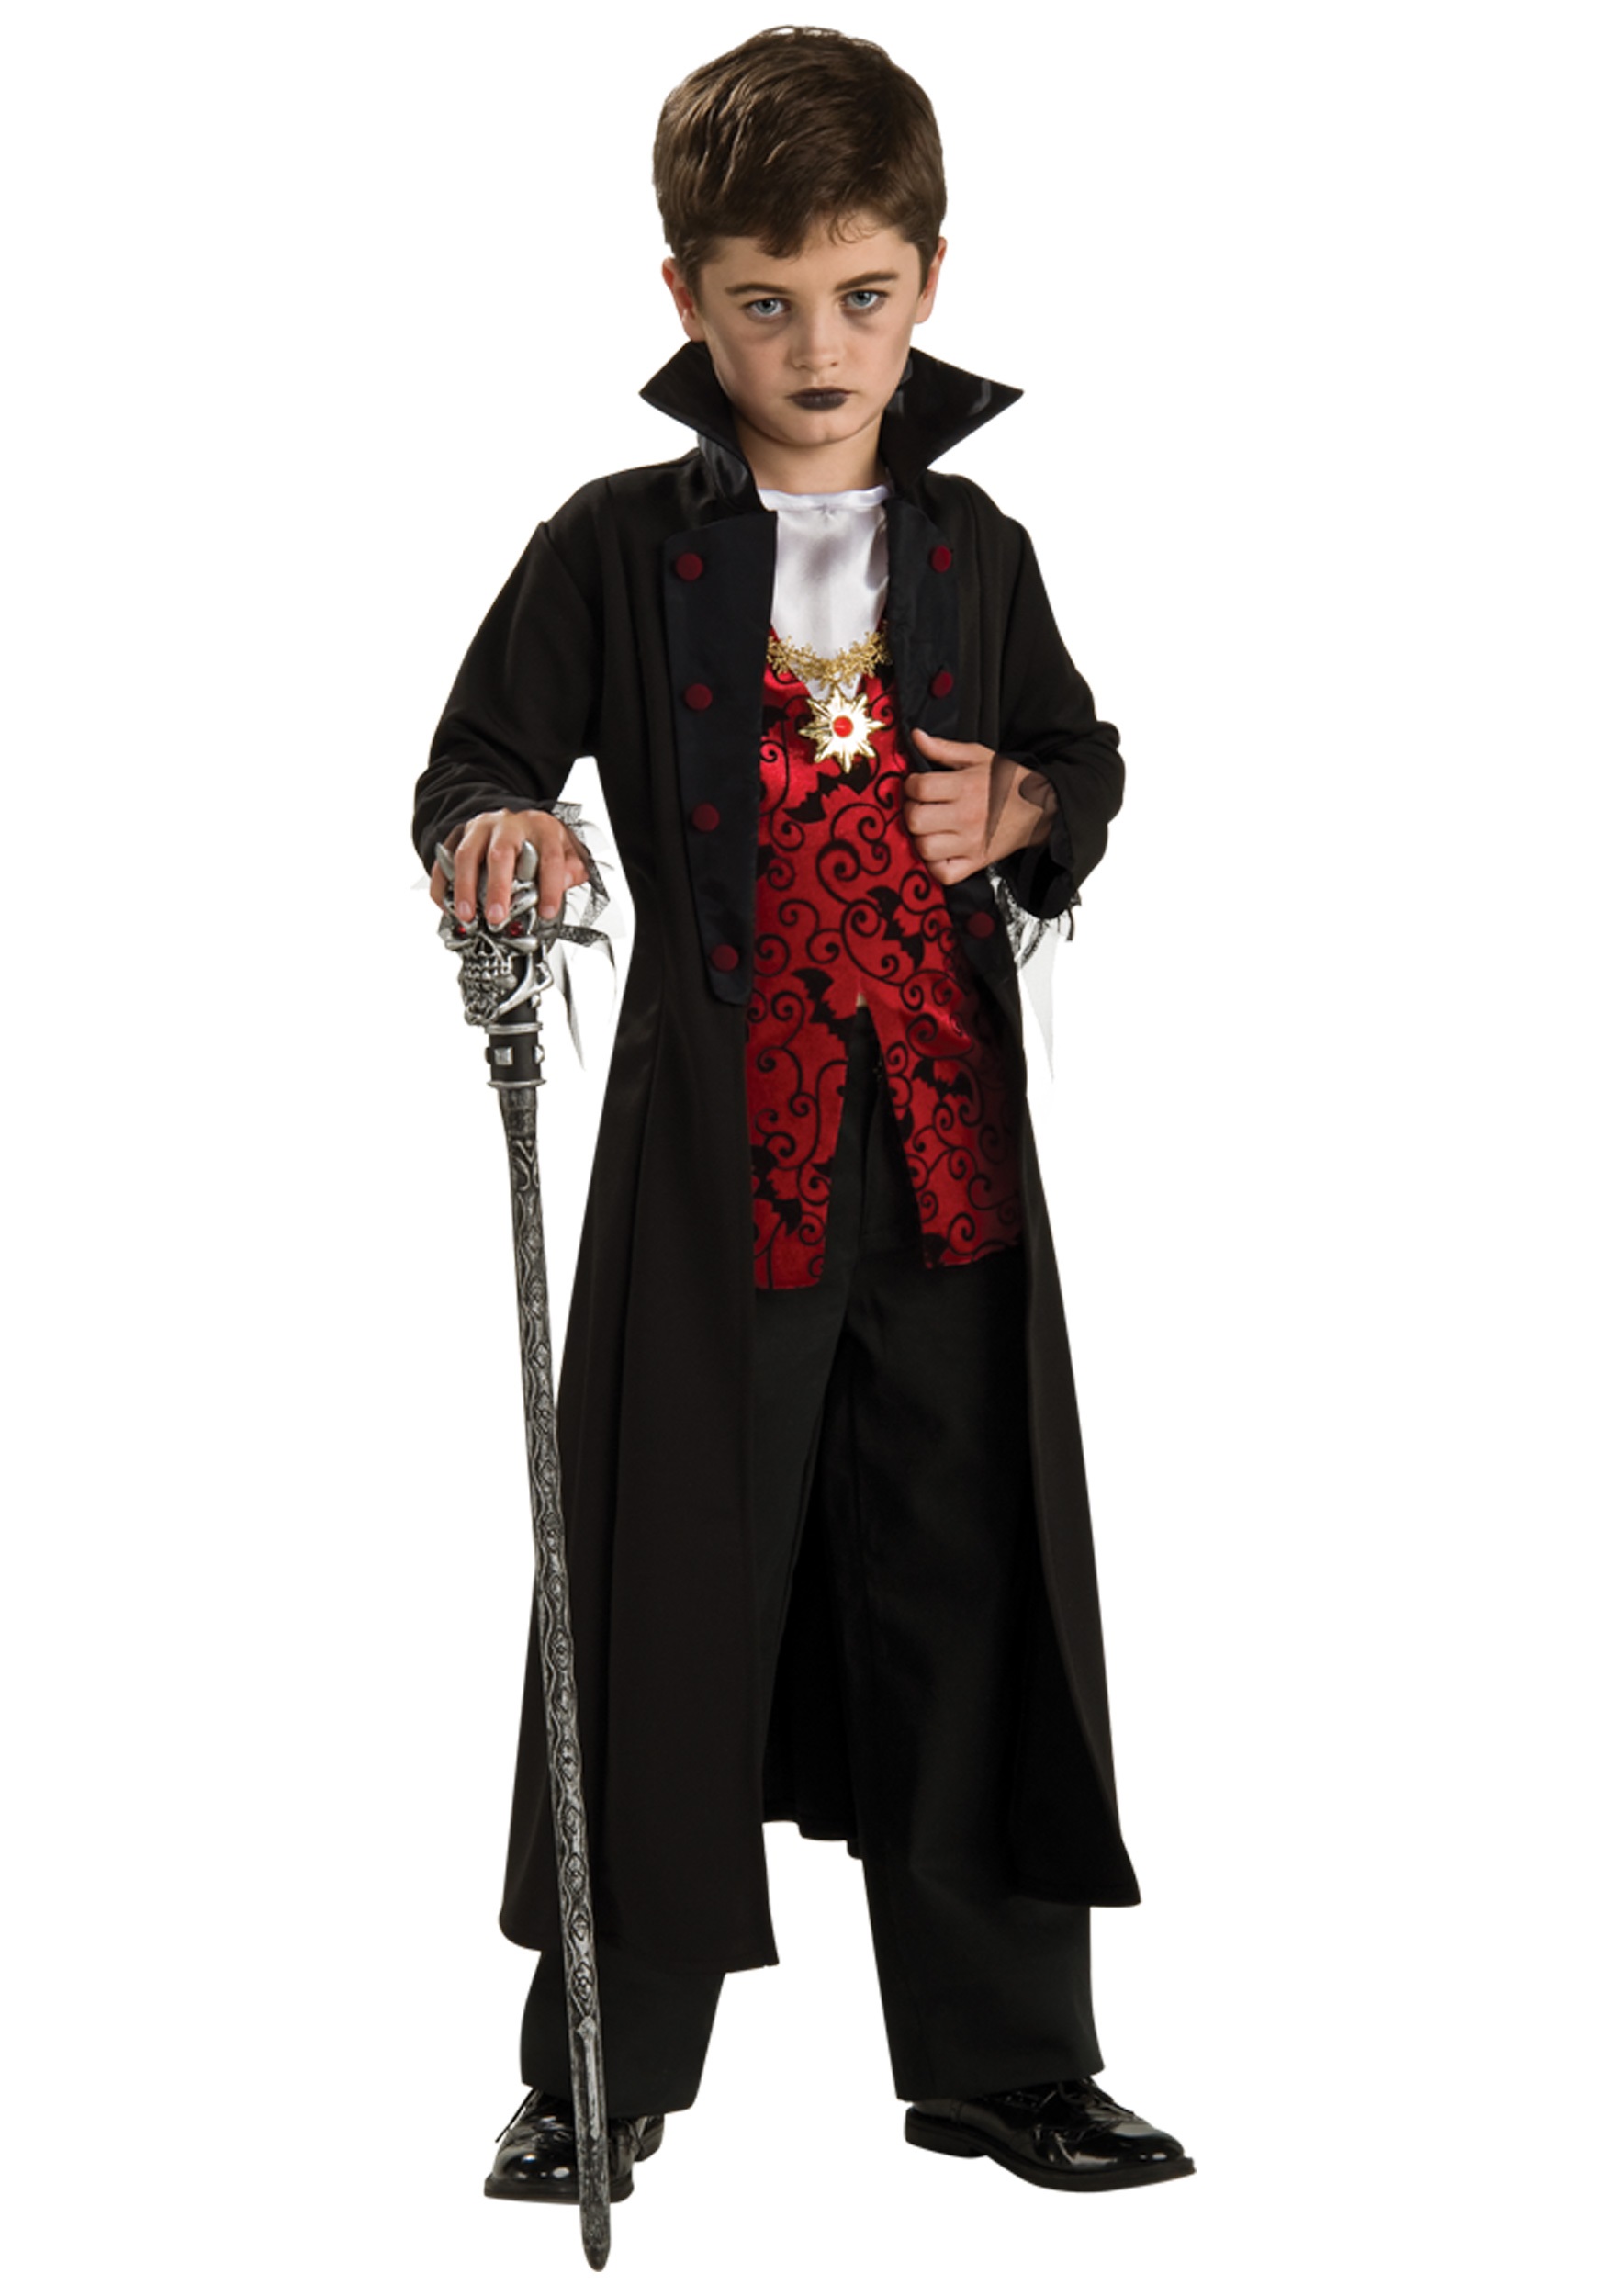 Photos - Fancy Dress Rubies Costume Co. Inc Vampire Dark Lord Costume for Kids Black RU883917 